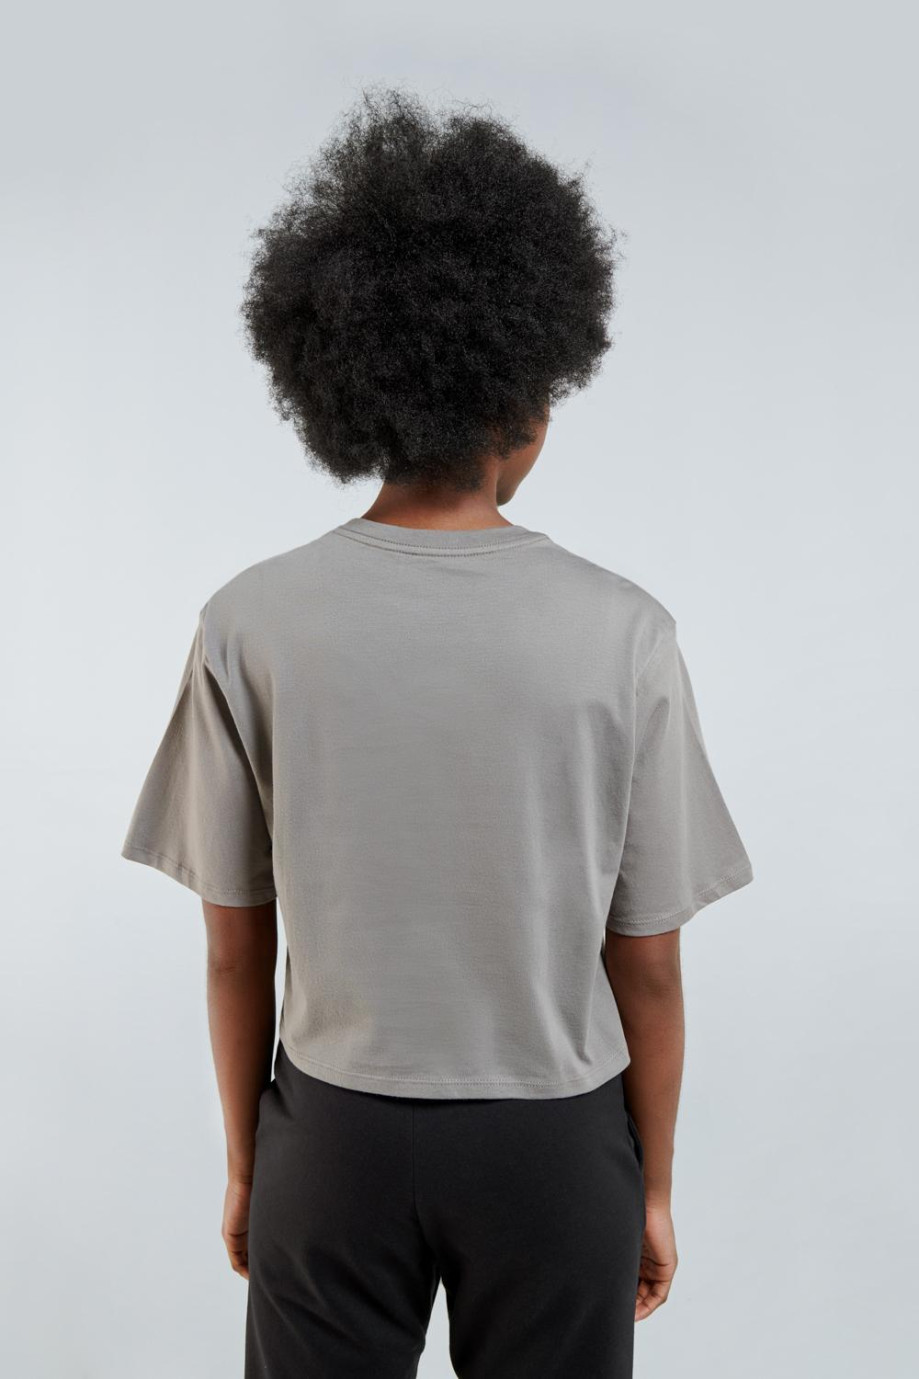 Camiseta unicolor oversize de silueta crop top con manga corta